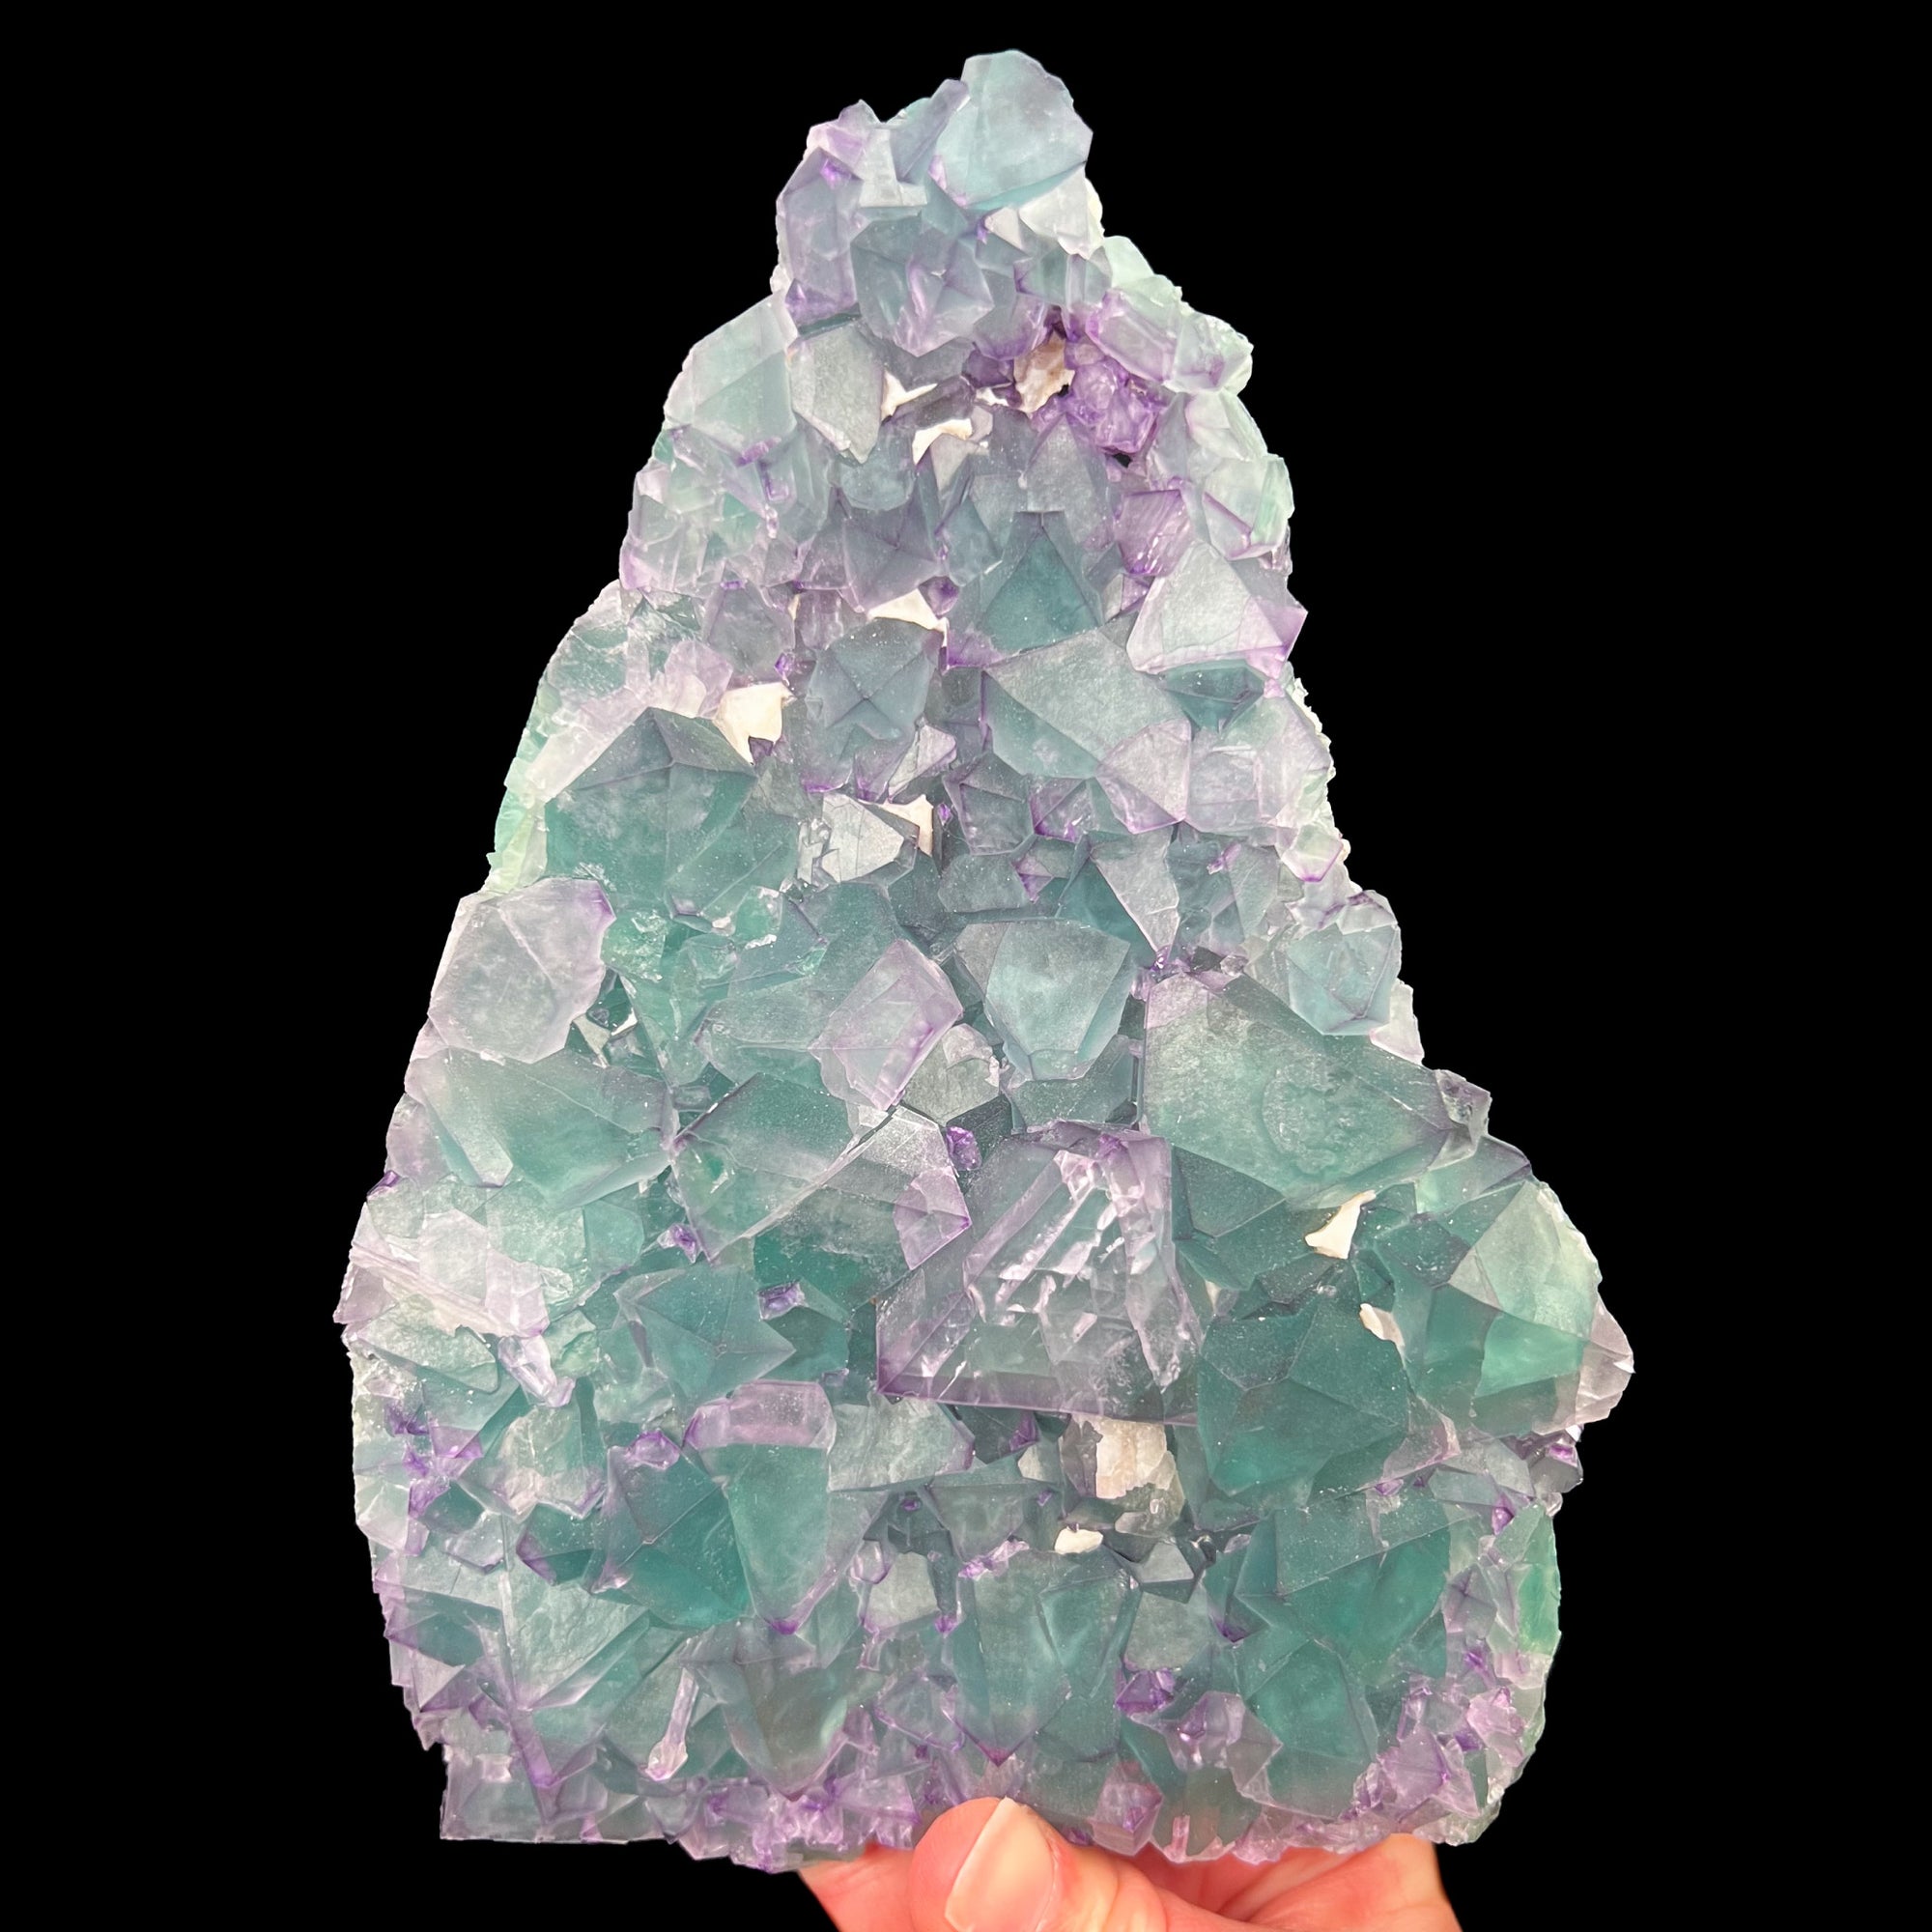 Large Fluorite Octahedron Crystal Specimen